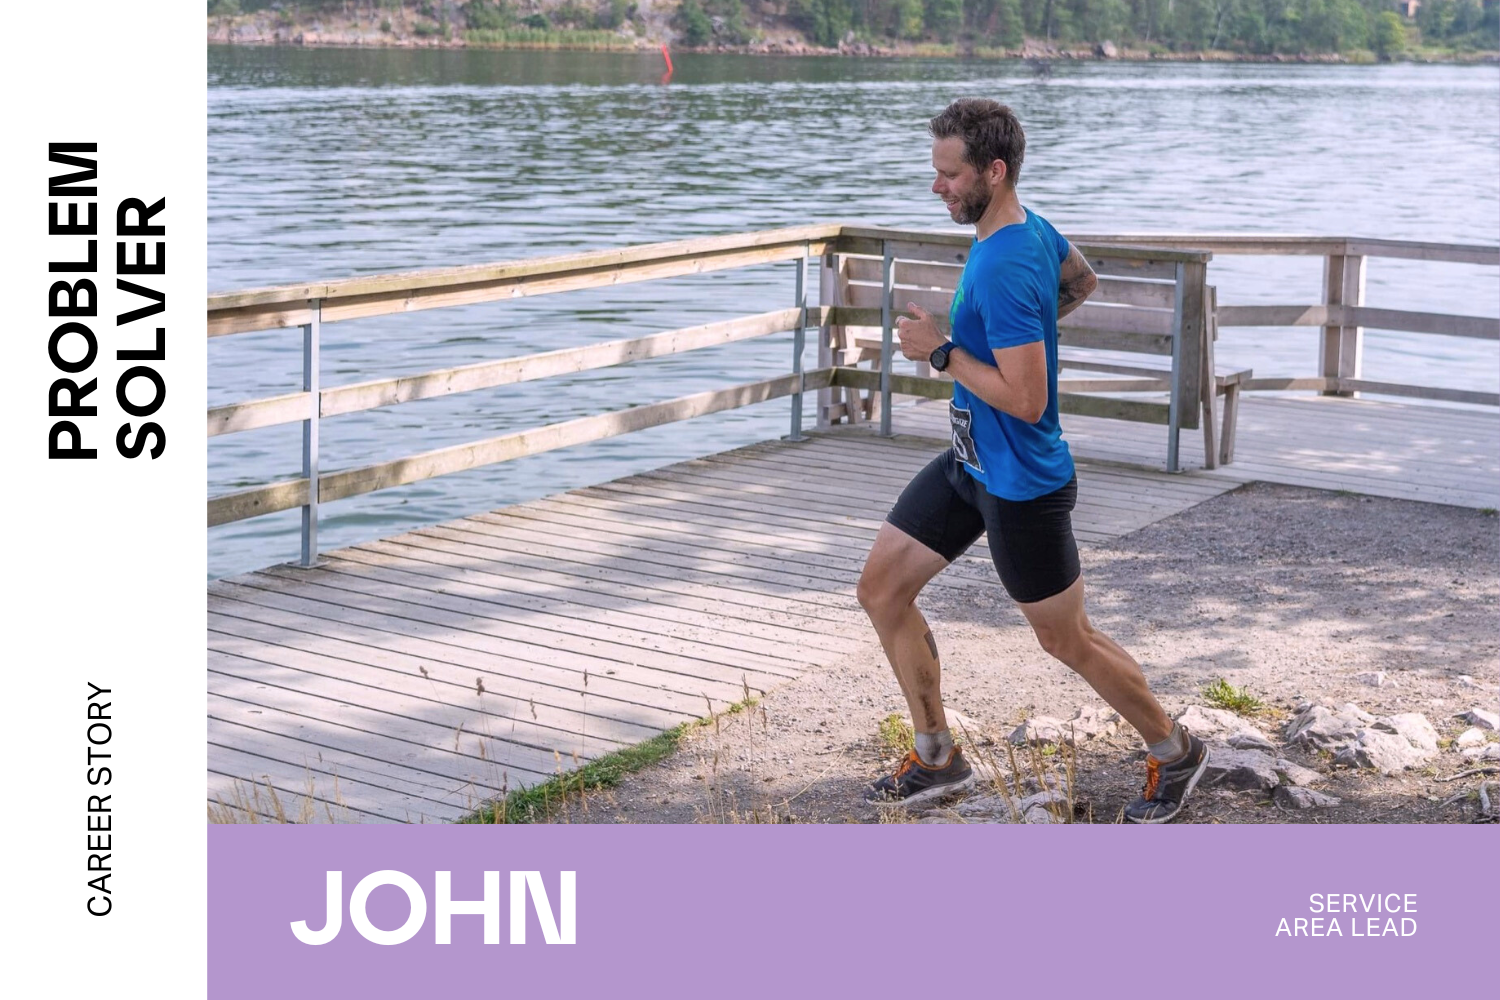 John Lamb, Service Area Lead, Problem solver. John is jogging next to a lake.